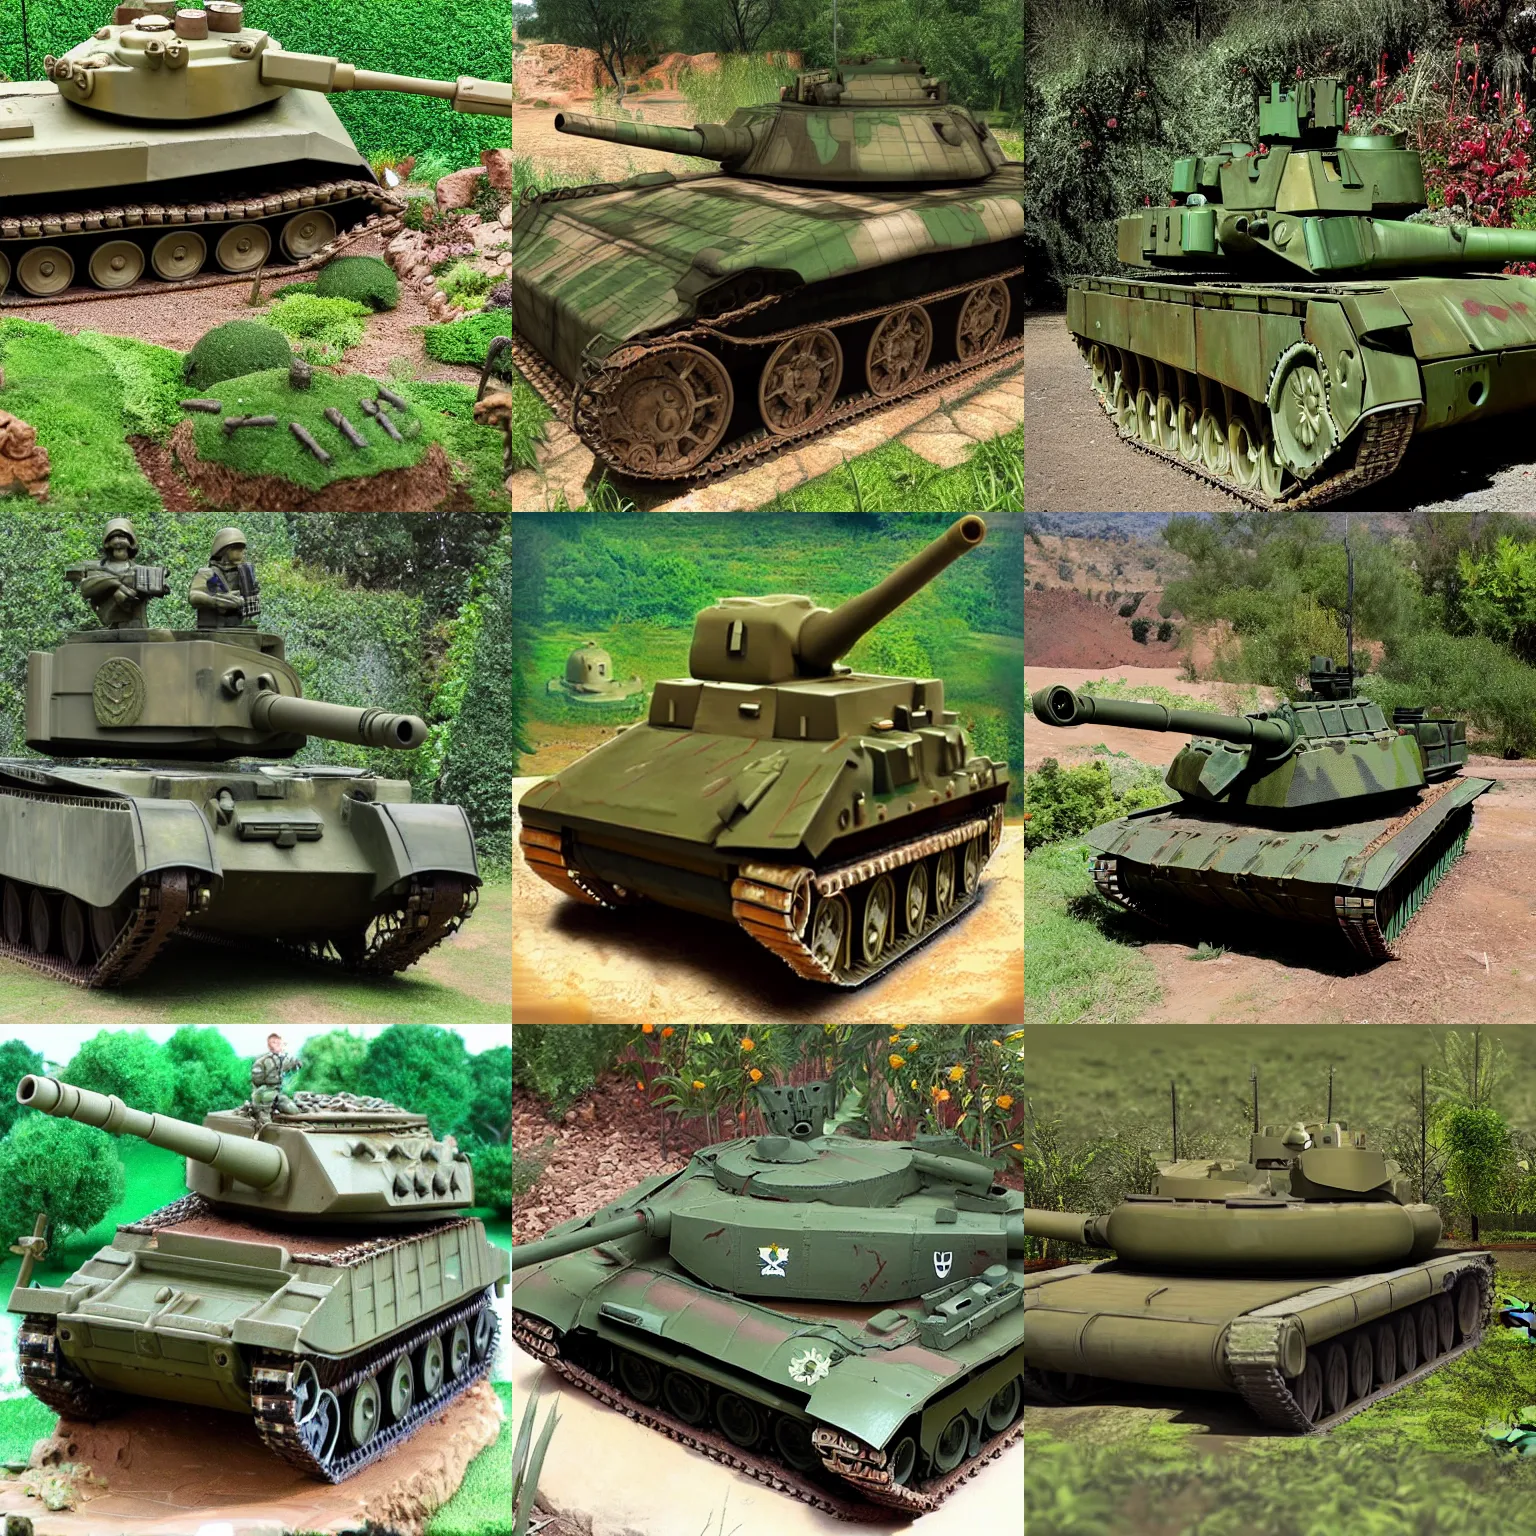 Prompt: army tank in garden of eden